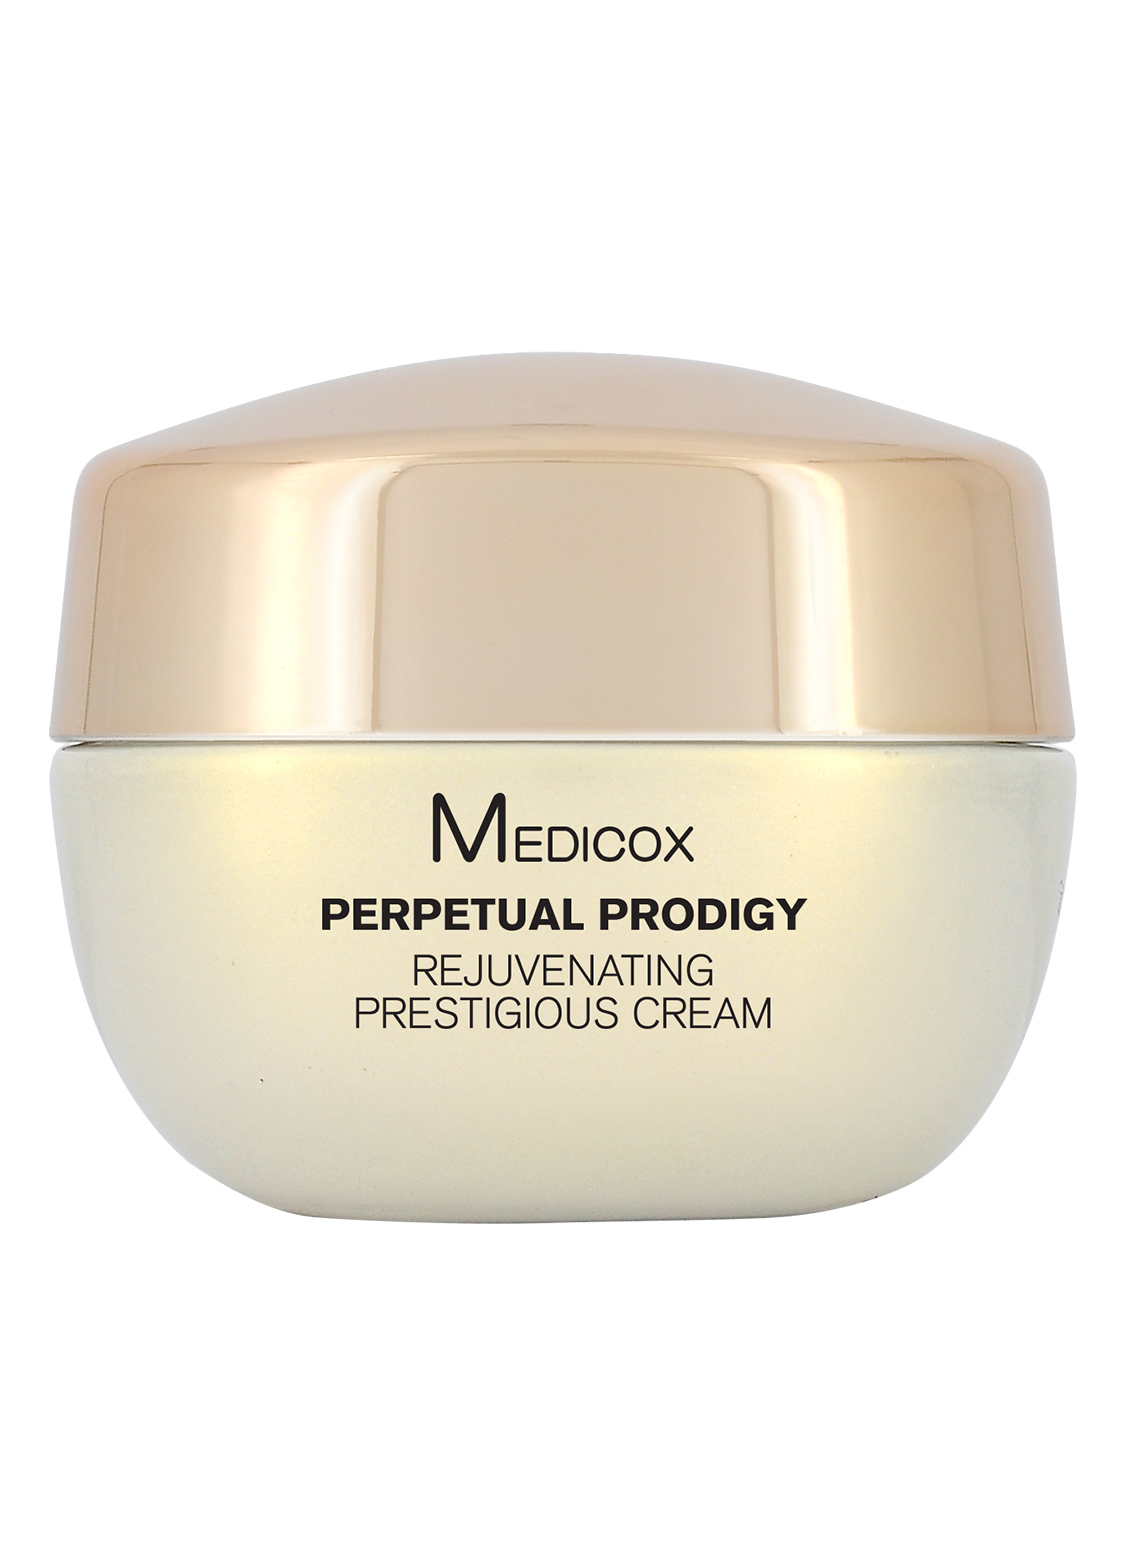 Perpetual Prodigy Rejuvenating Prestigious Cream